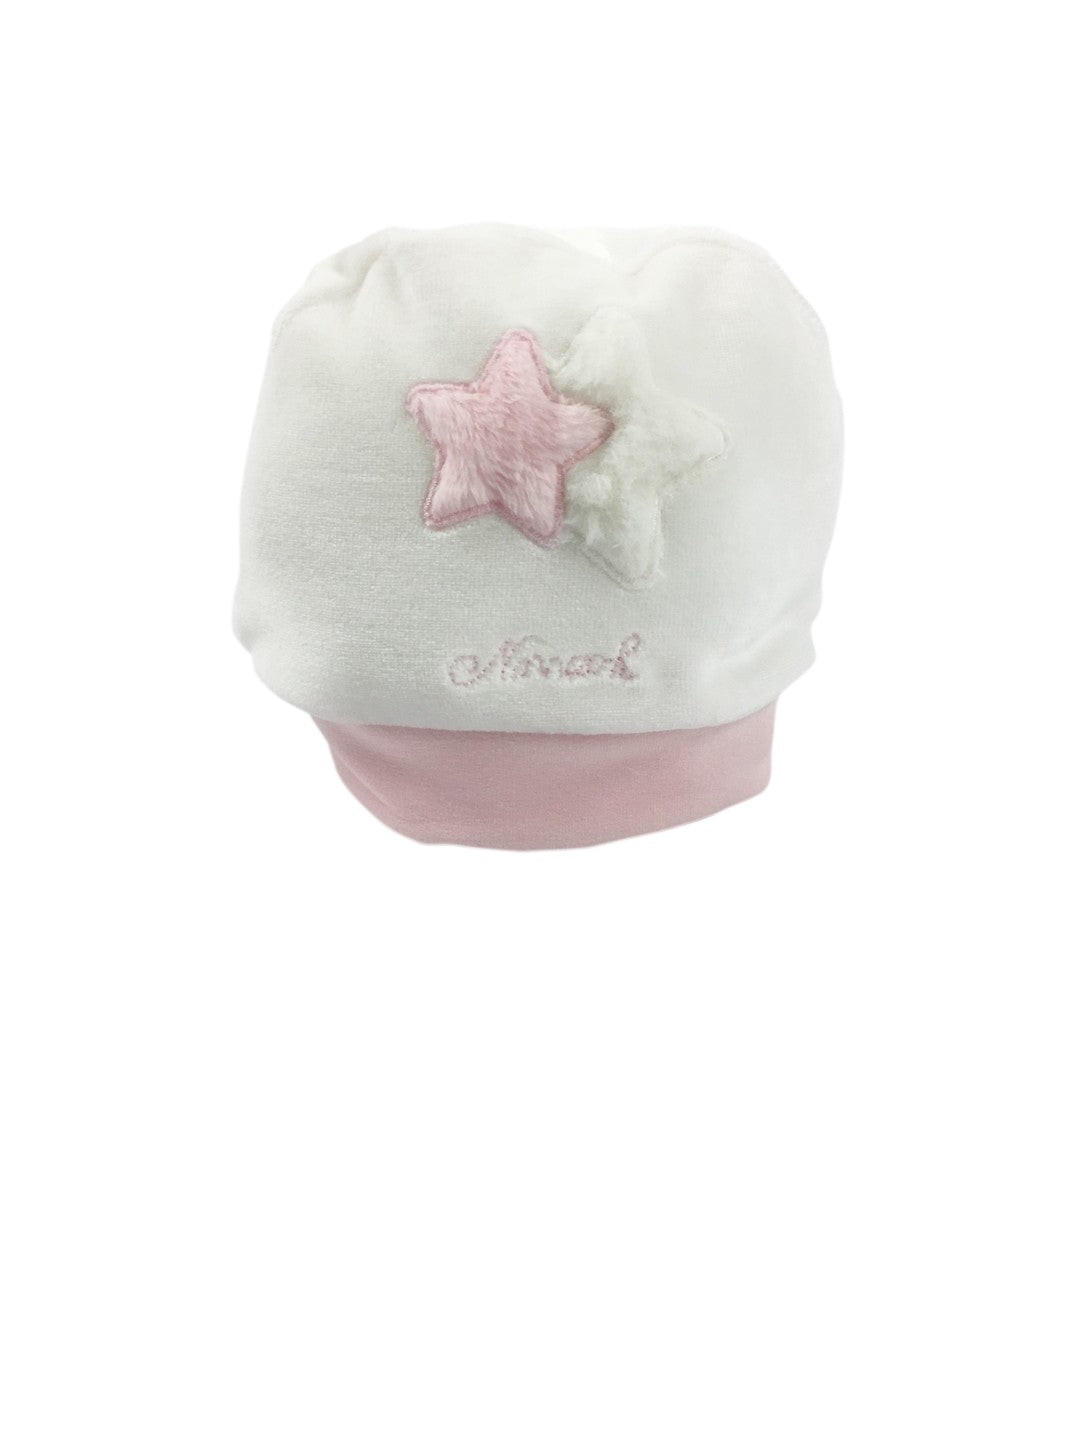 Cappello In Ciniglia Bianco Con Stelle Rosa Neonata NINNAOH I2086 - NINNAOH - LuxuryKids